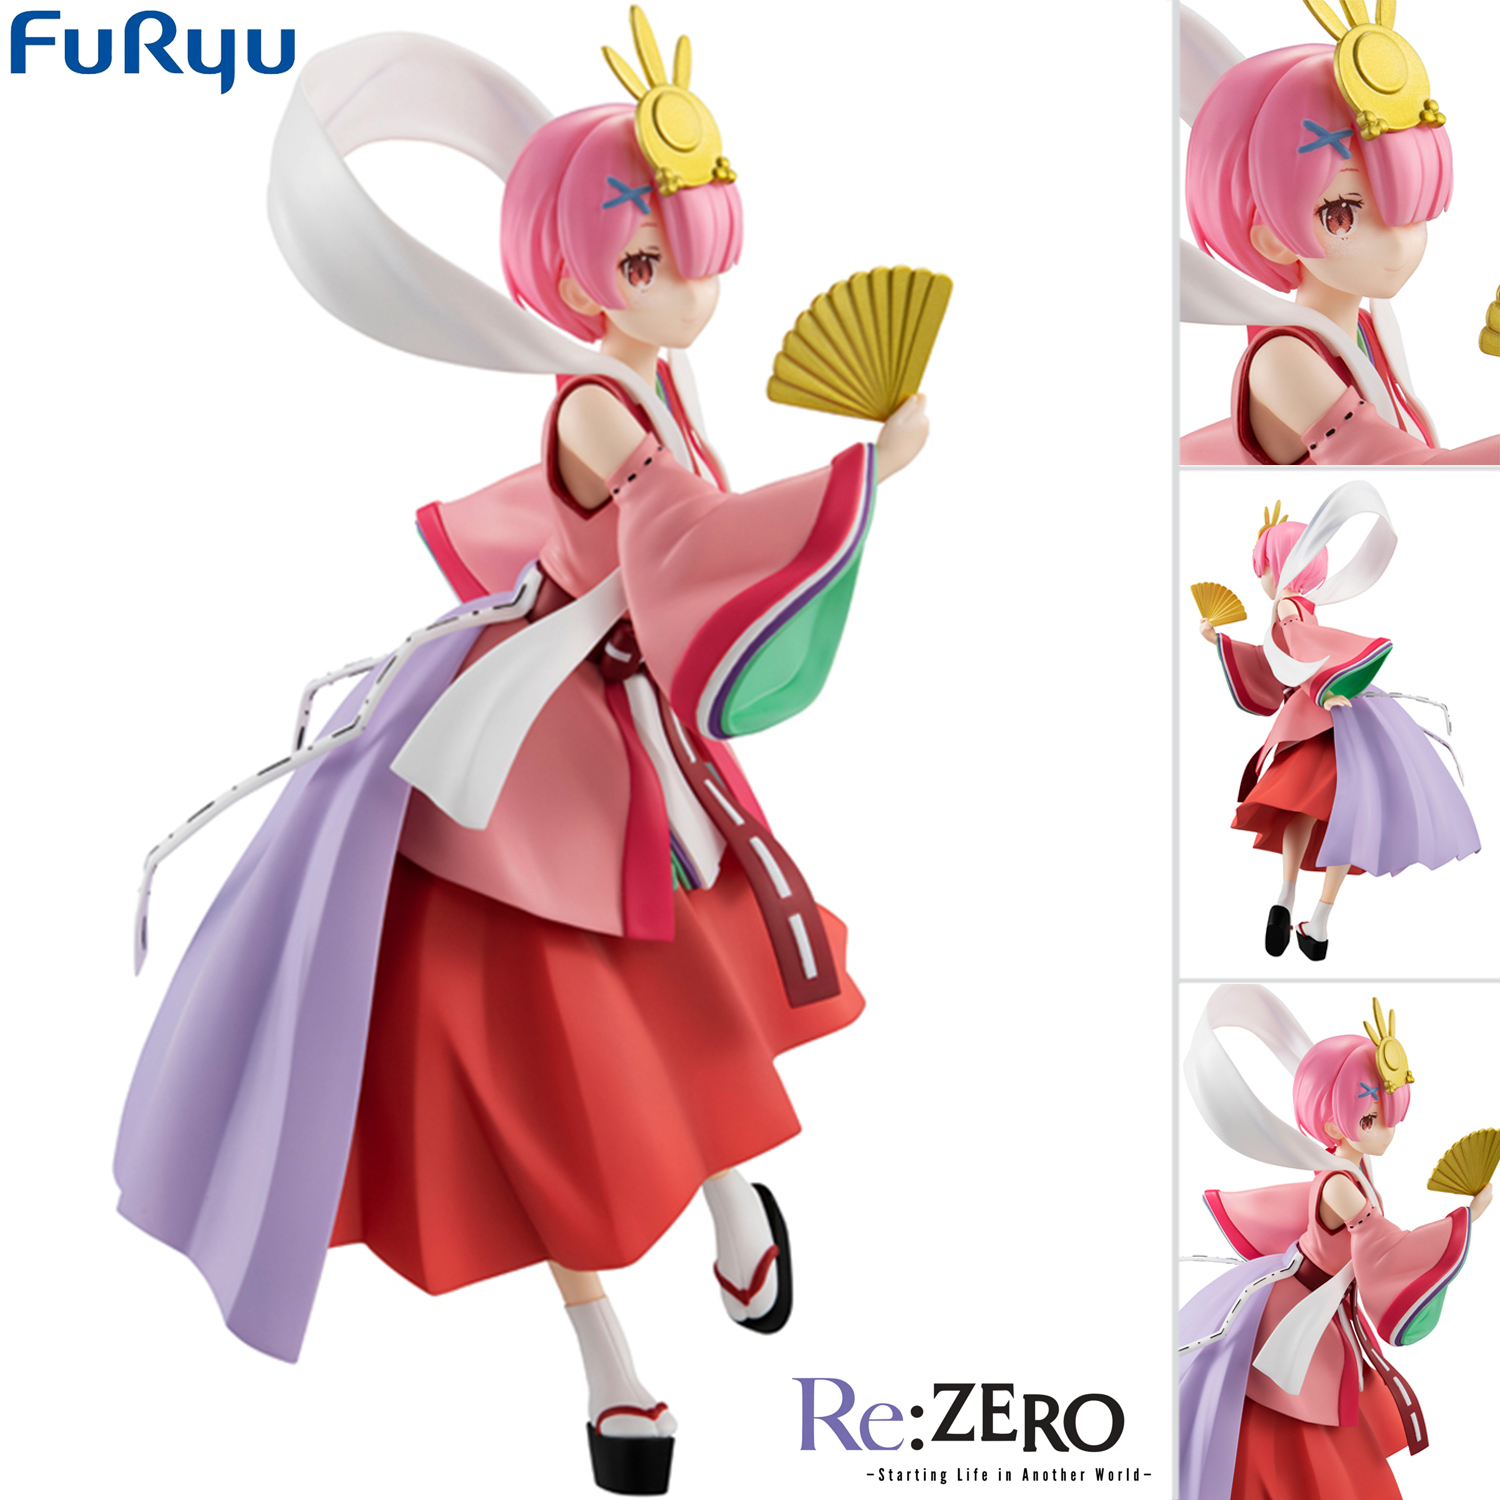 Model โมเดล งานแท้ 100% Furyu จากการ์ตูน Re Zero Starting Life in Another World รีเซทชีวิต ฝ่าวิกฤตต่างโลก Ram kaguya แรม คางุยะ Hime Fairy Tall Series SSS Ver Figure ฟิกเกอร์ Anime อนิเมะ การ์ตูน มังงะ Doll ตุ๊กตา คอลเลกชัน สั่งและนำเข้าจากญี่ปุ่น manga